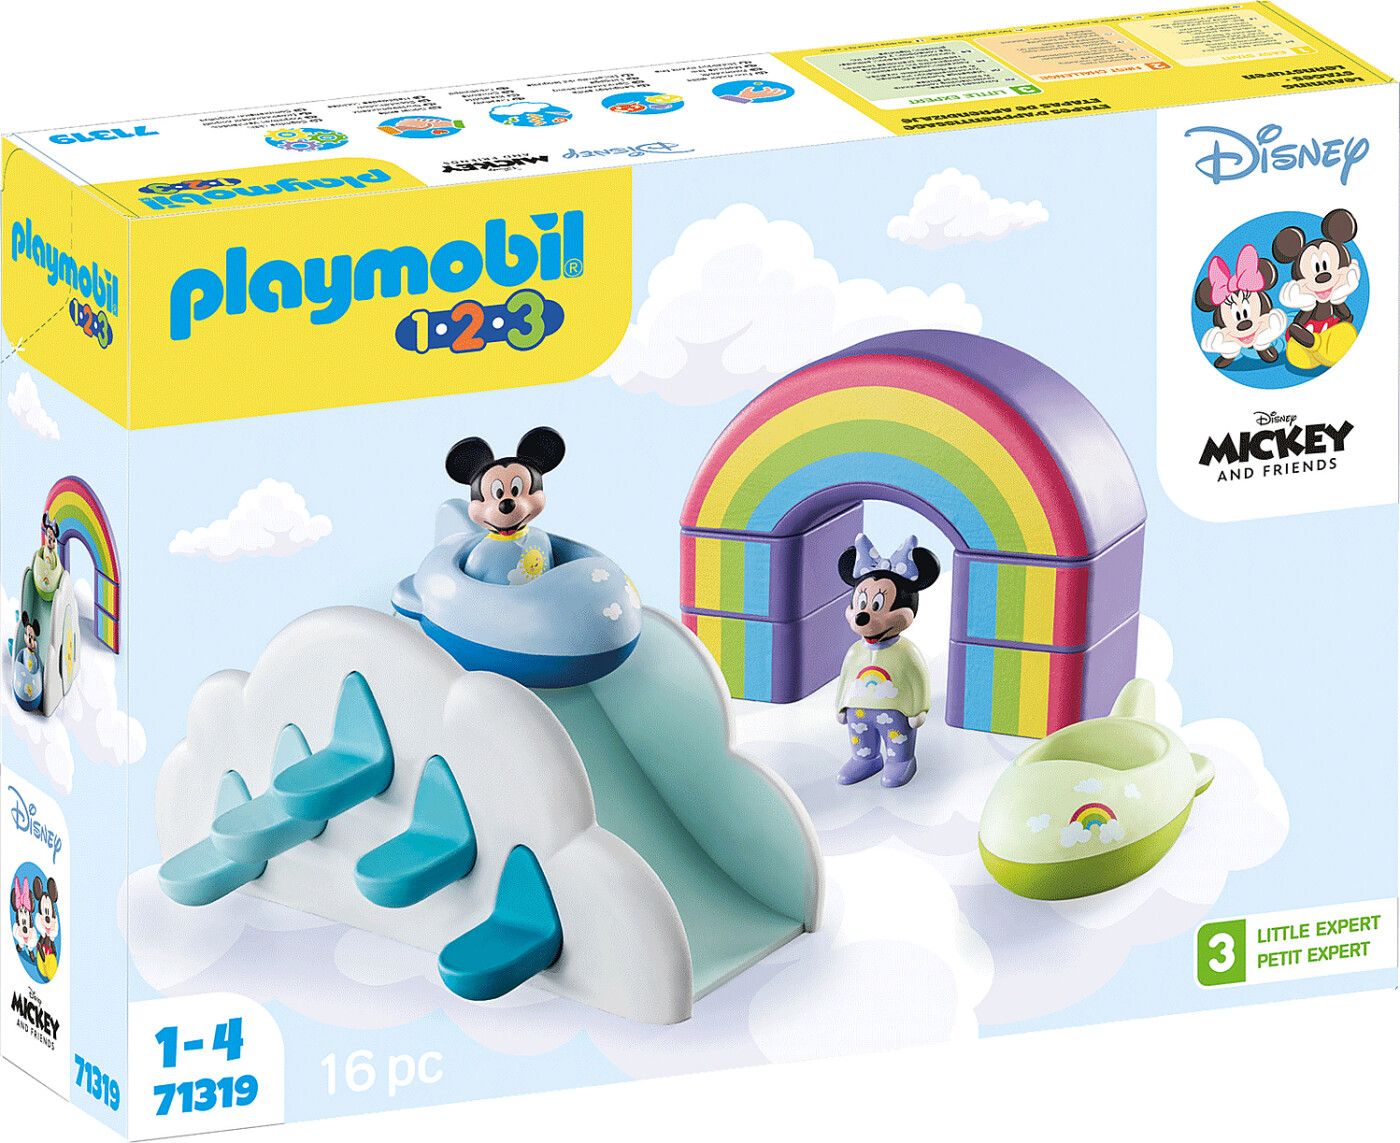 Se Playmobil 123 Disney - Mickeys Og Minnies Skyhus - 71319 hos Gucca.dk